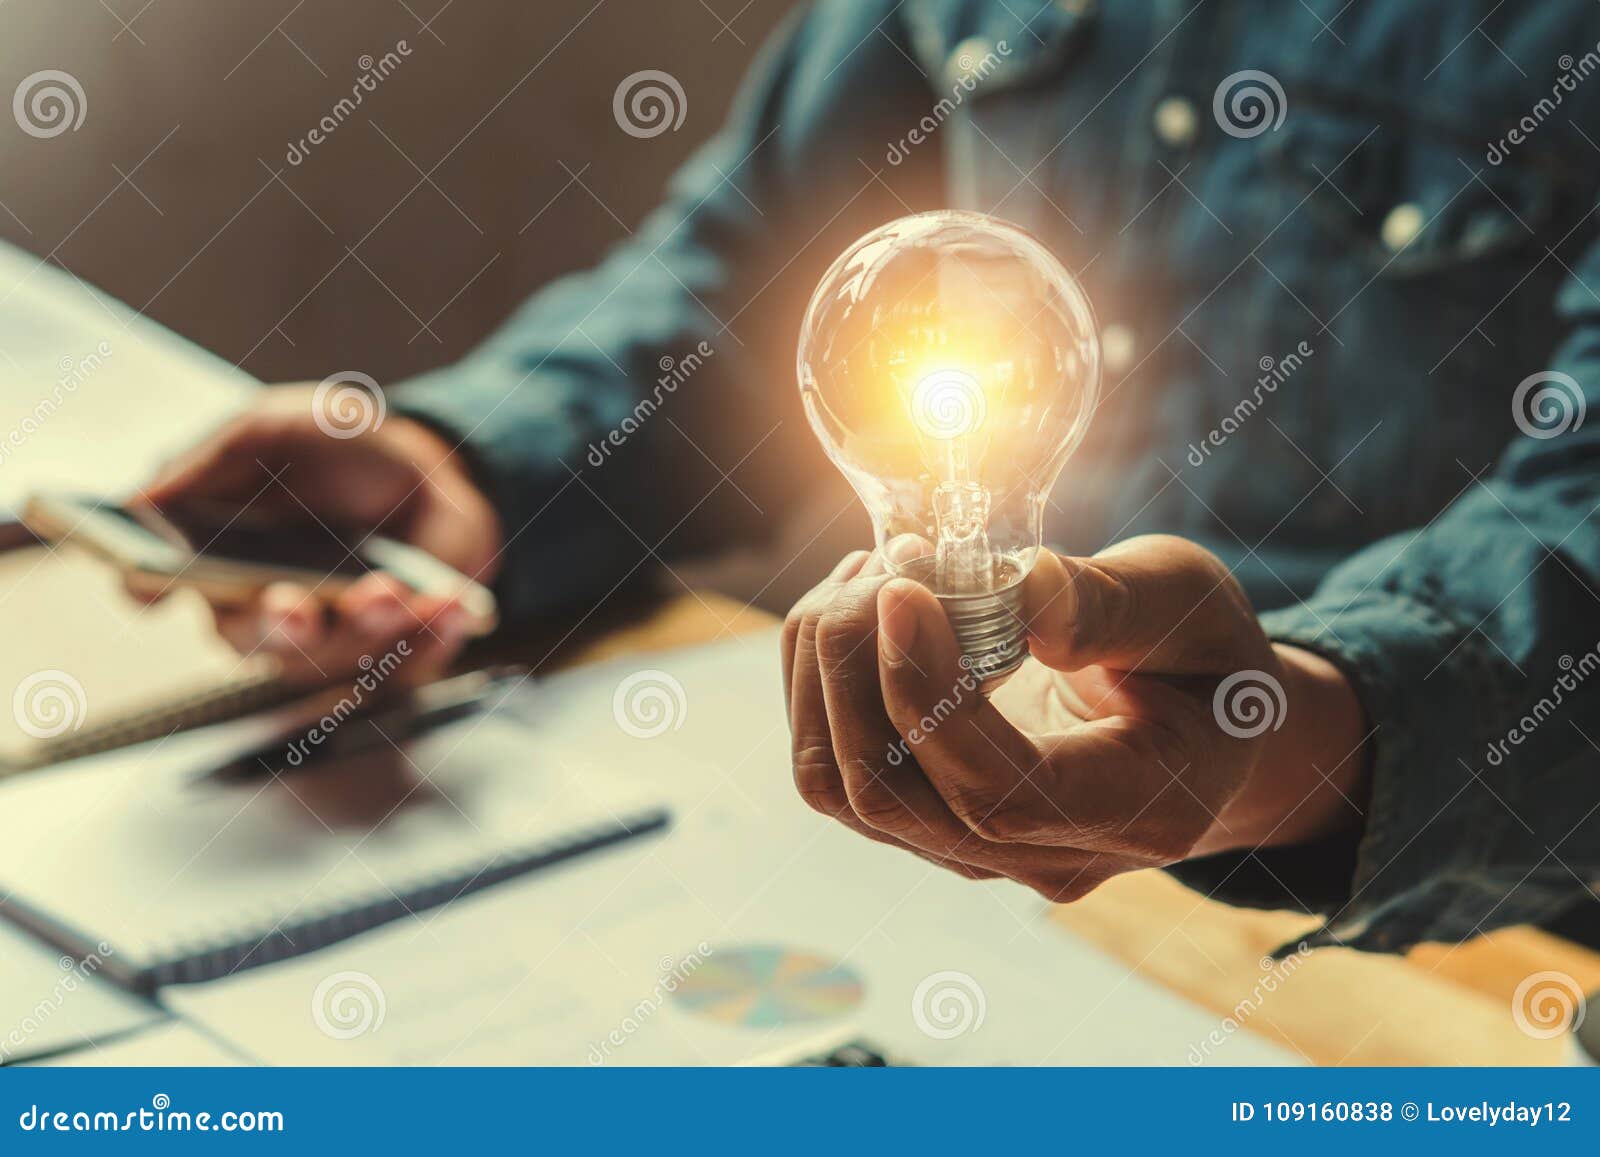 concept idea saving energy. businessman hand holding lightbulb i